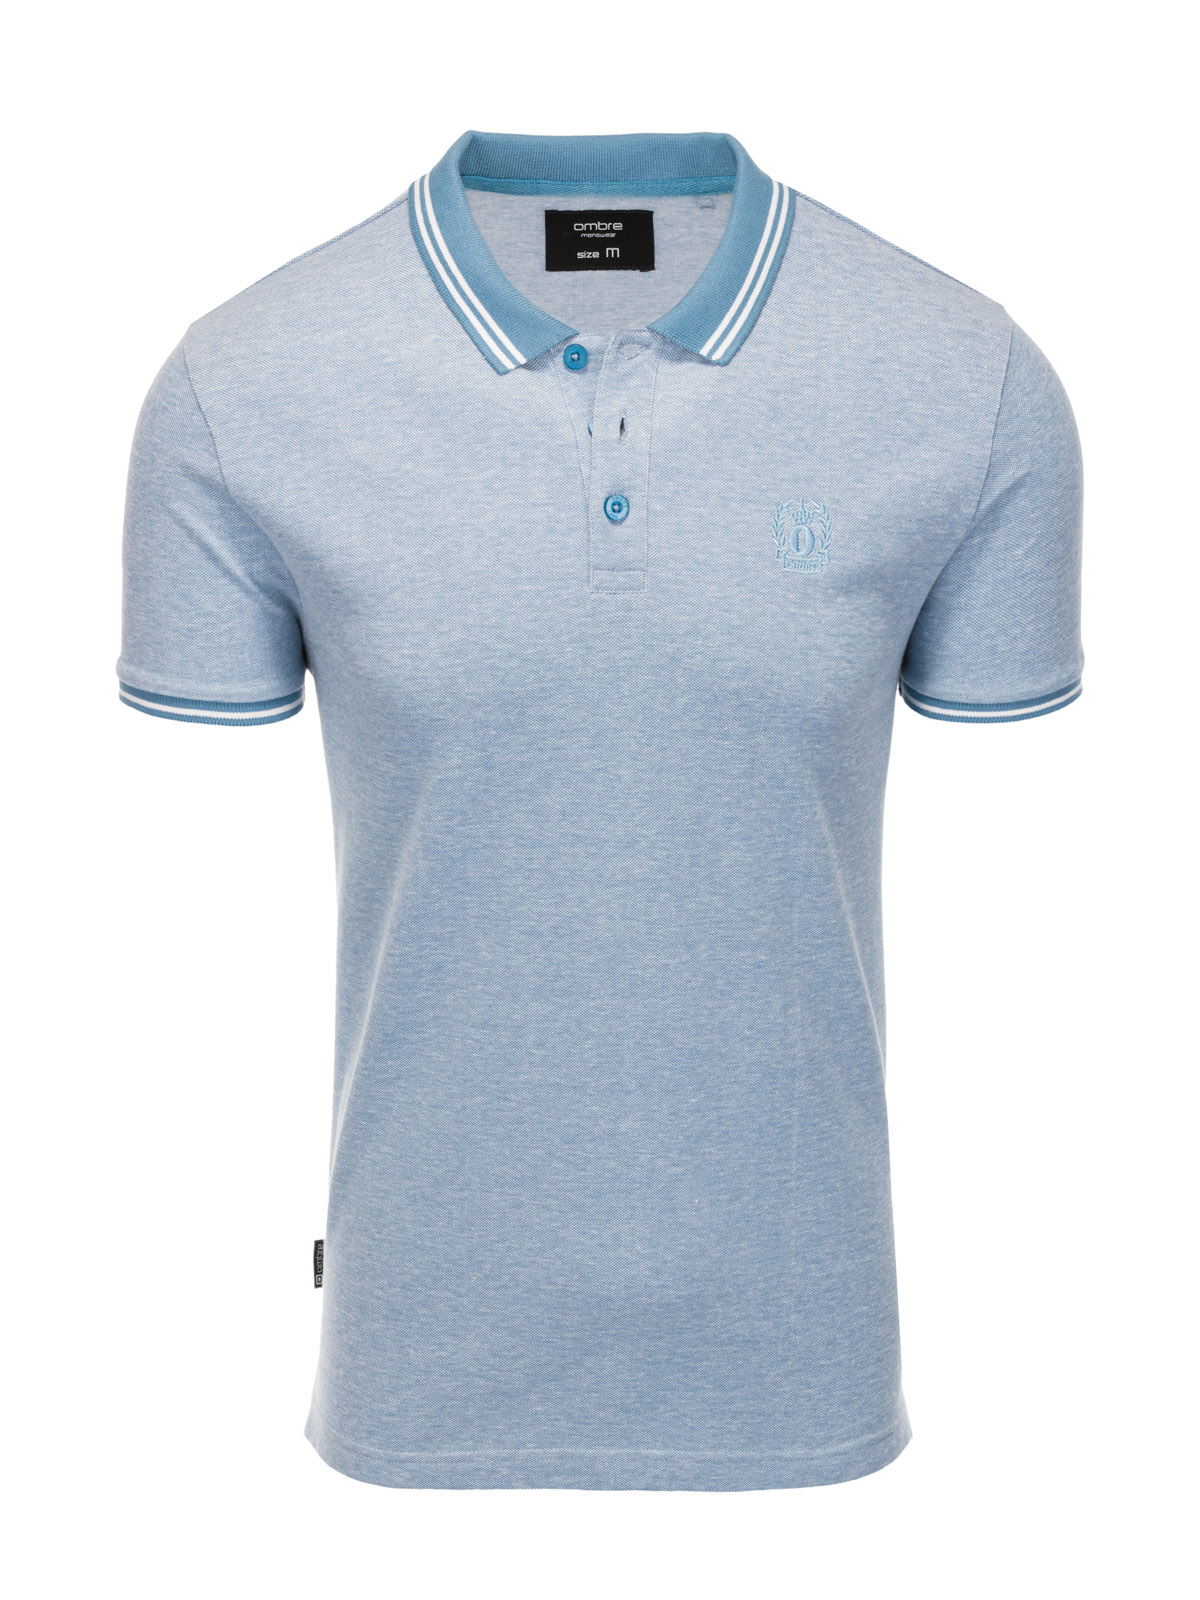 Men\'s melange polo V3 online - clothing S1618 collar shirt contrast - blue with | Ombre.com Men\'s